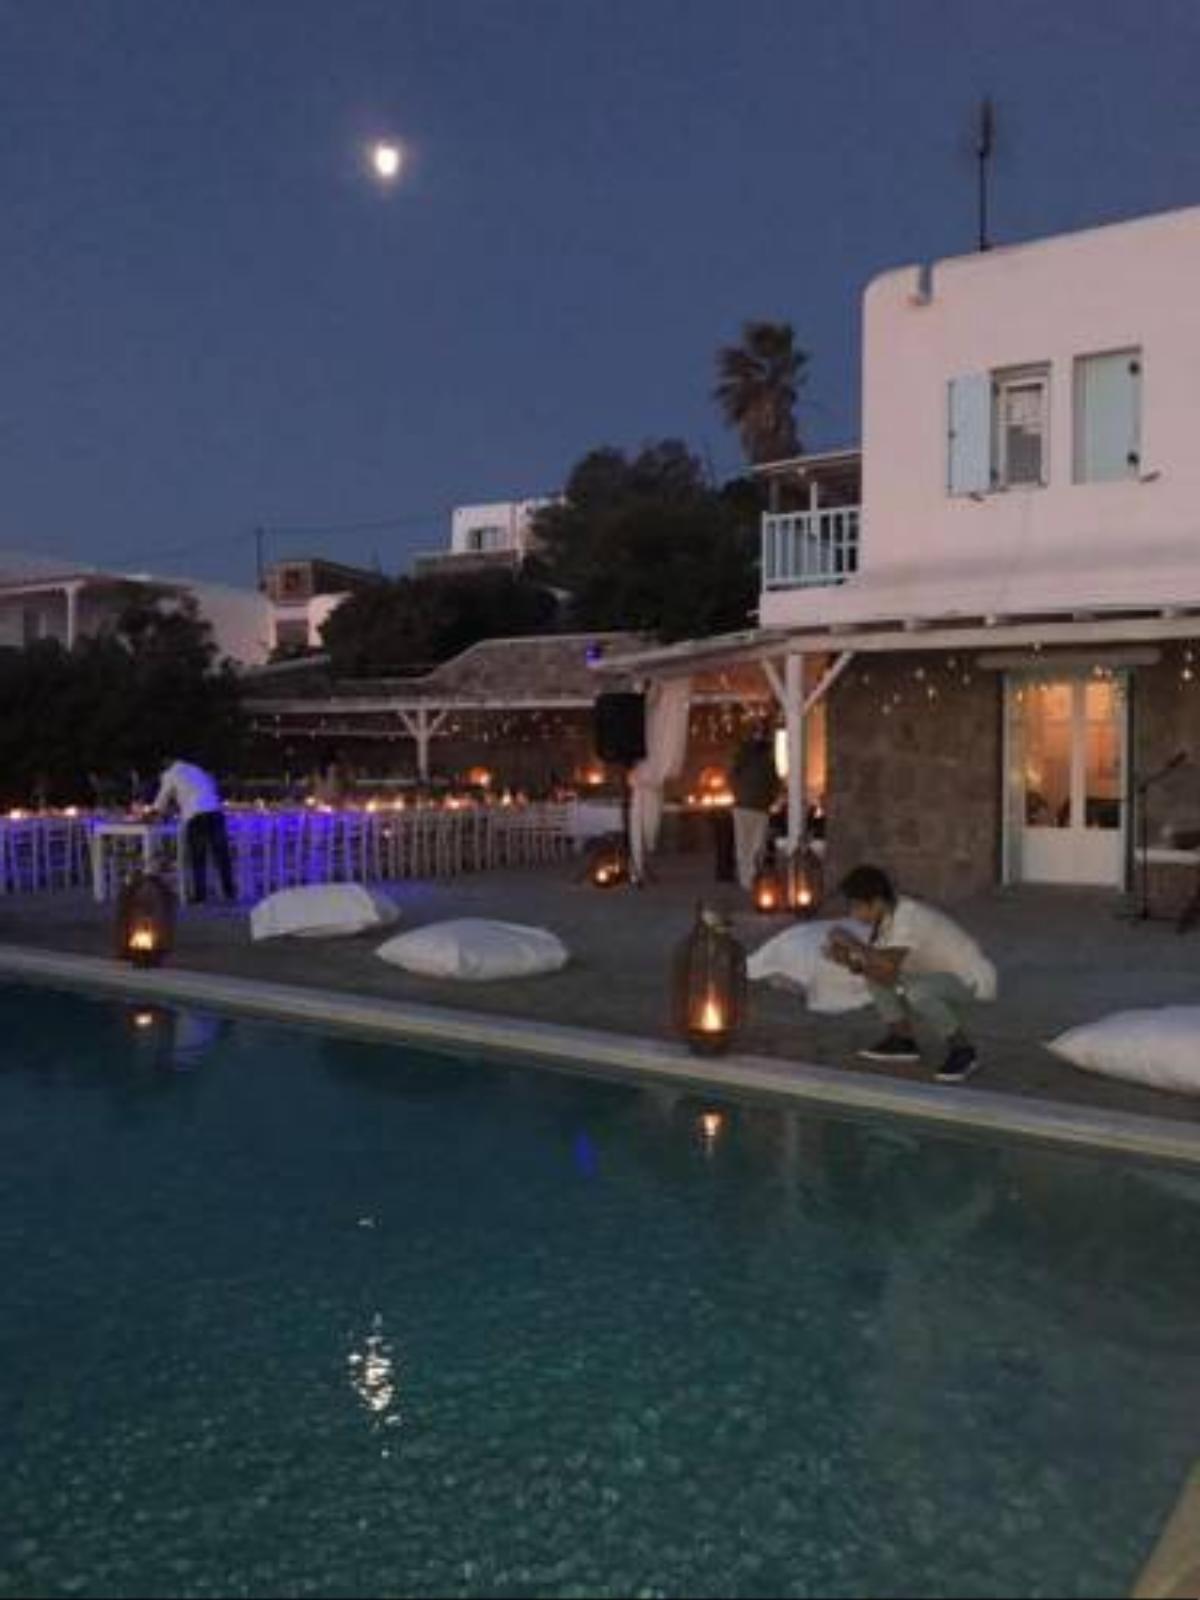 Iro's Villa Hotel Agios Ioannis Mykonos Greece